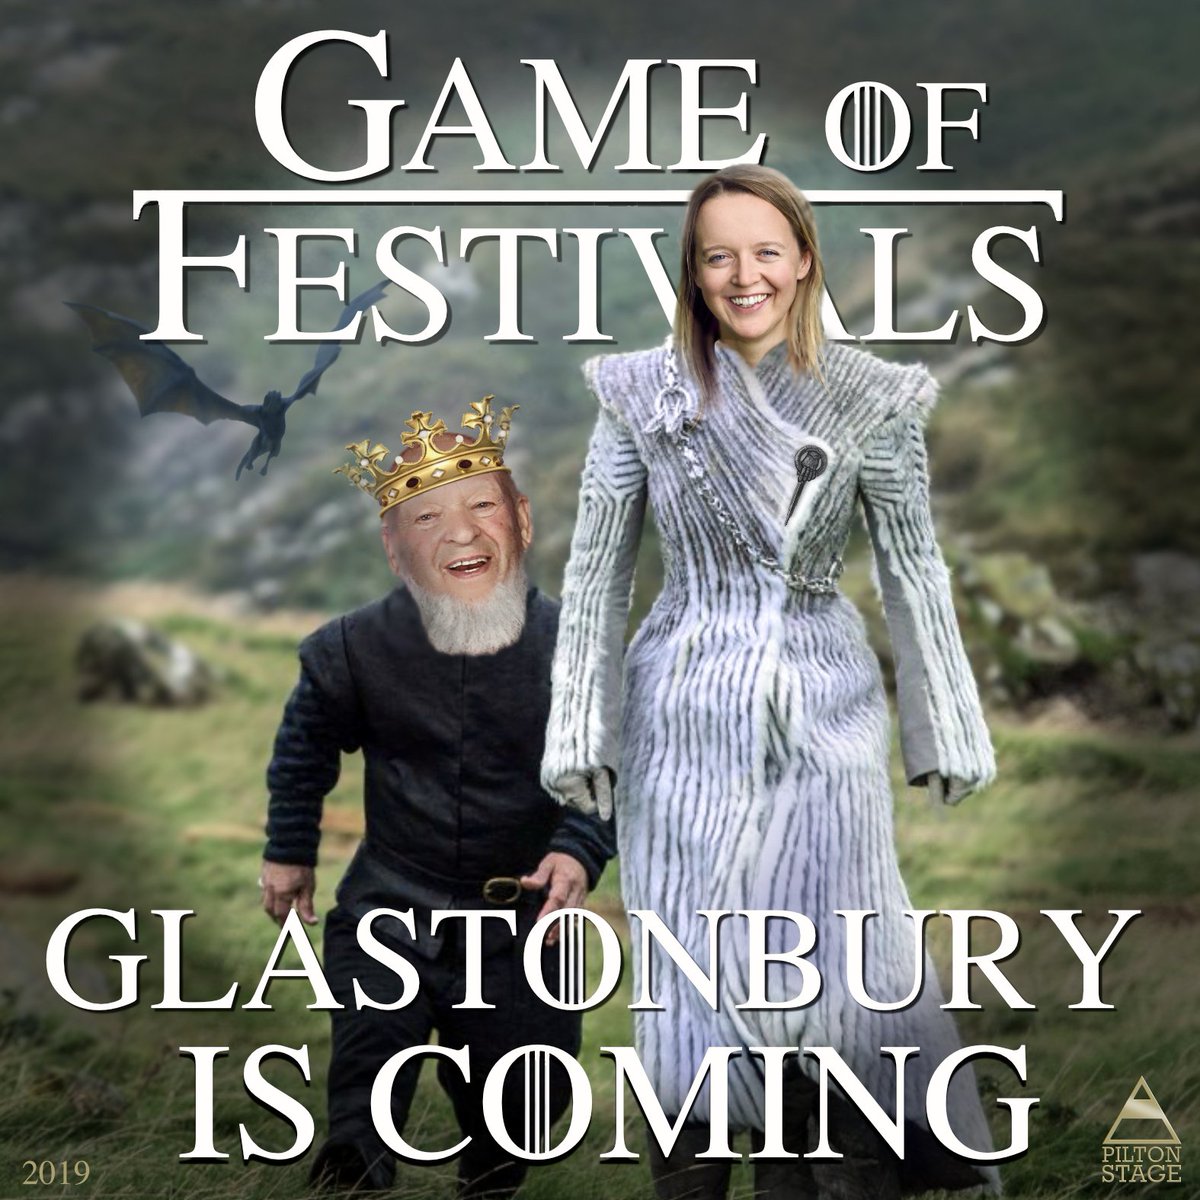 'GLASTONBURY IS COMING'... @GlastoFest @GlastoFestFeed @GlastoChat @GlastoWatch @glastofreepress @GlastonburyFM @TheGlastoThingy @GlastoLive @musicexpouk